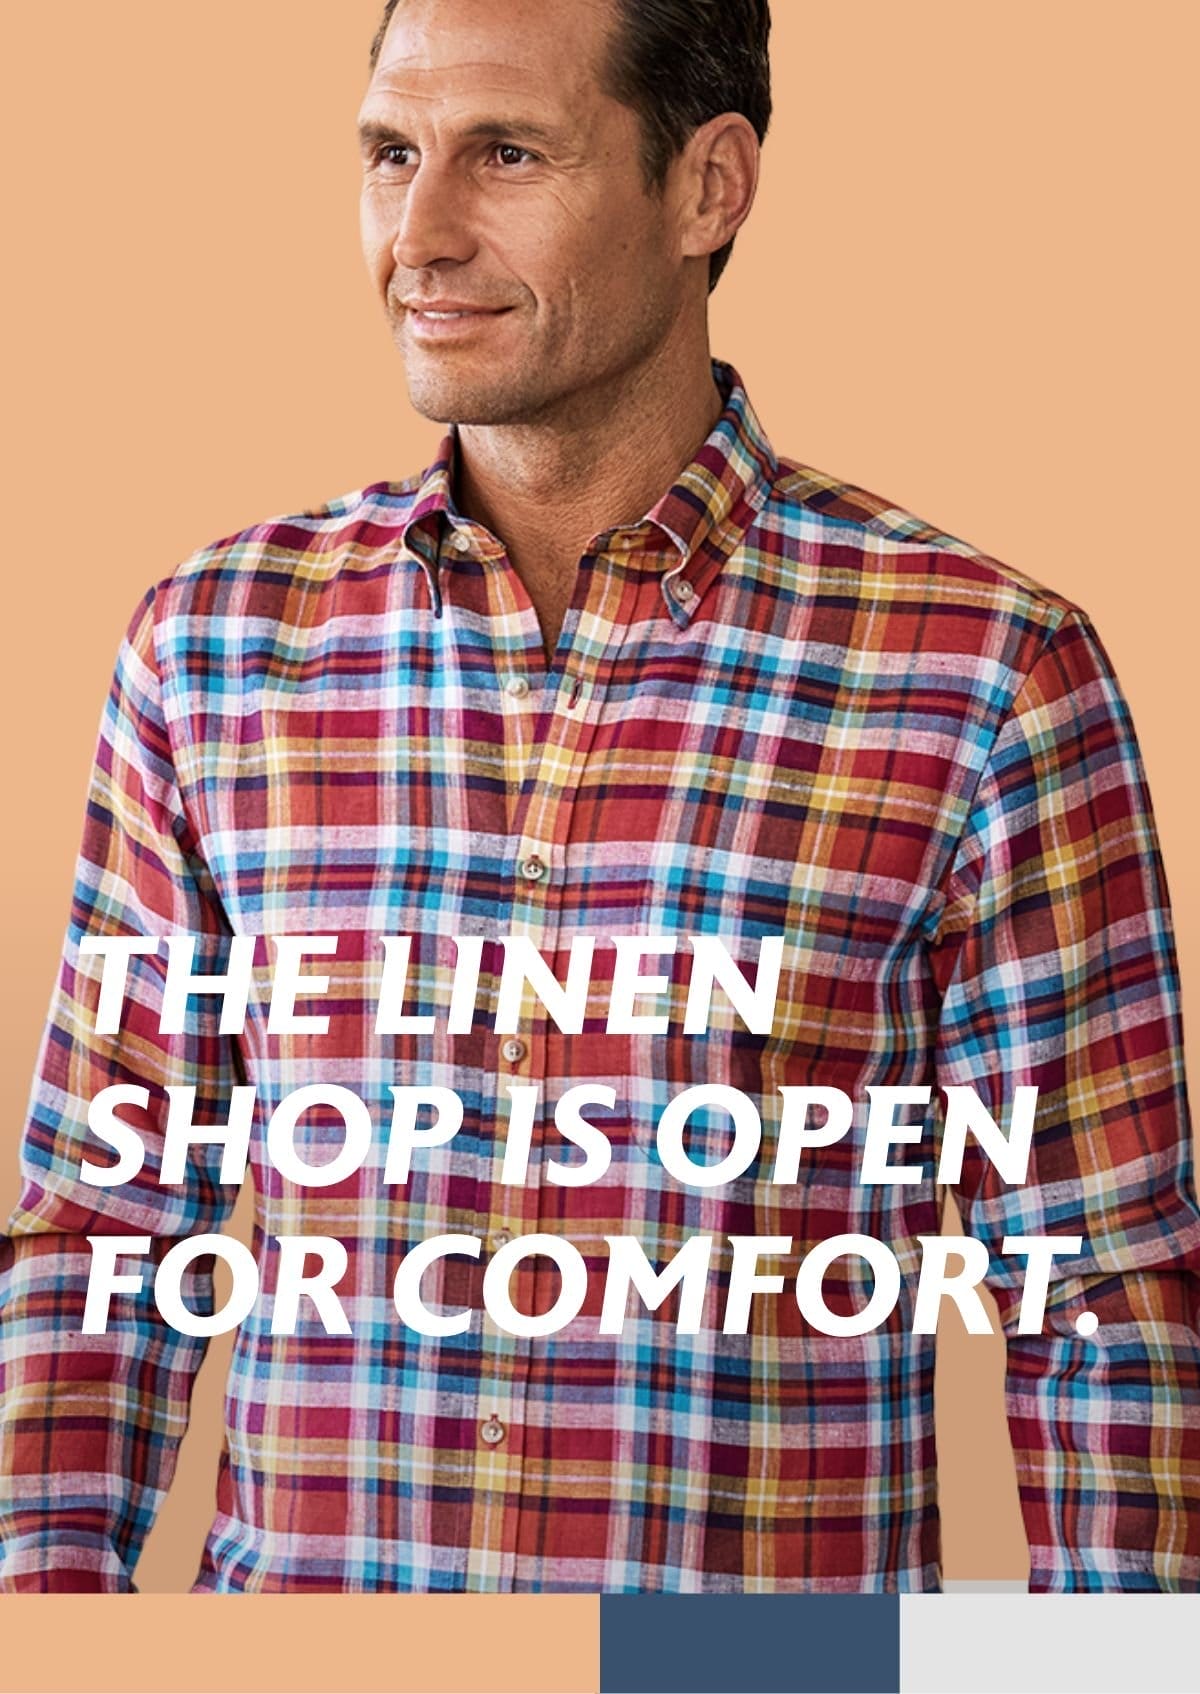 linen shop is open